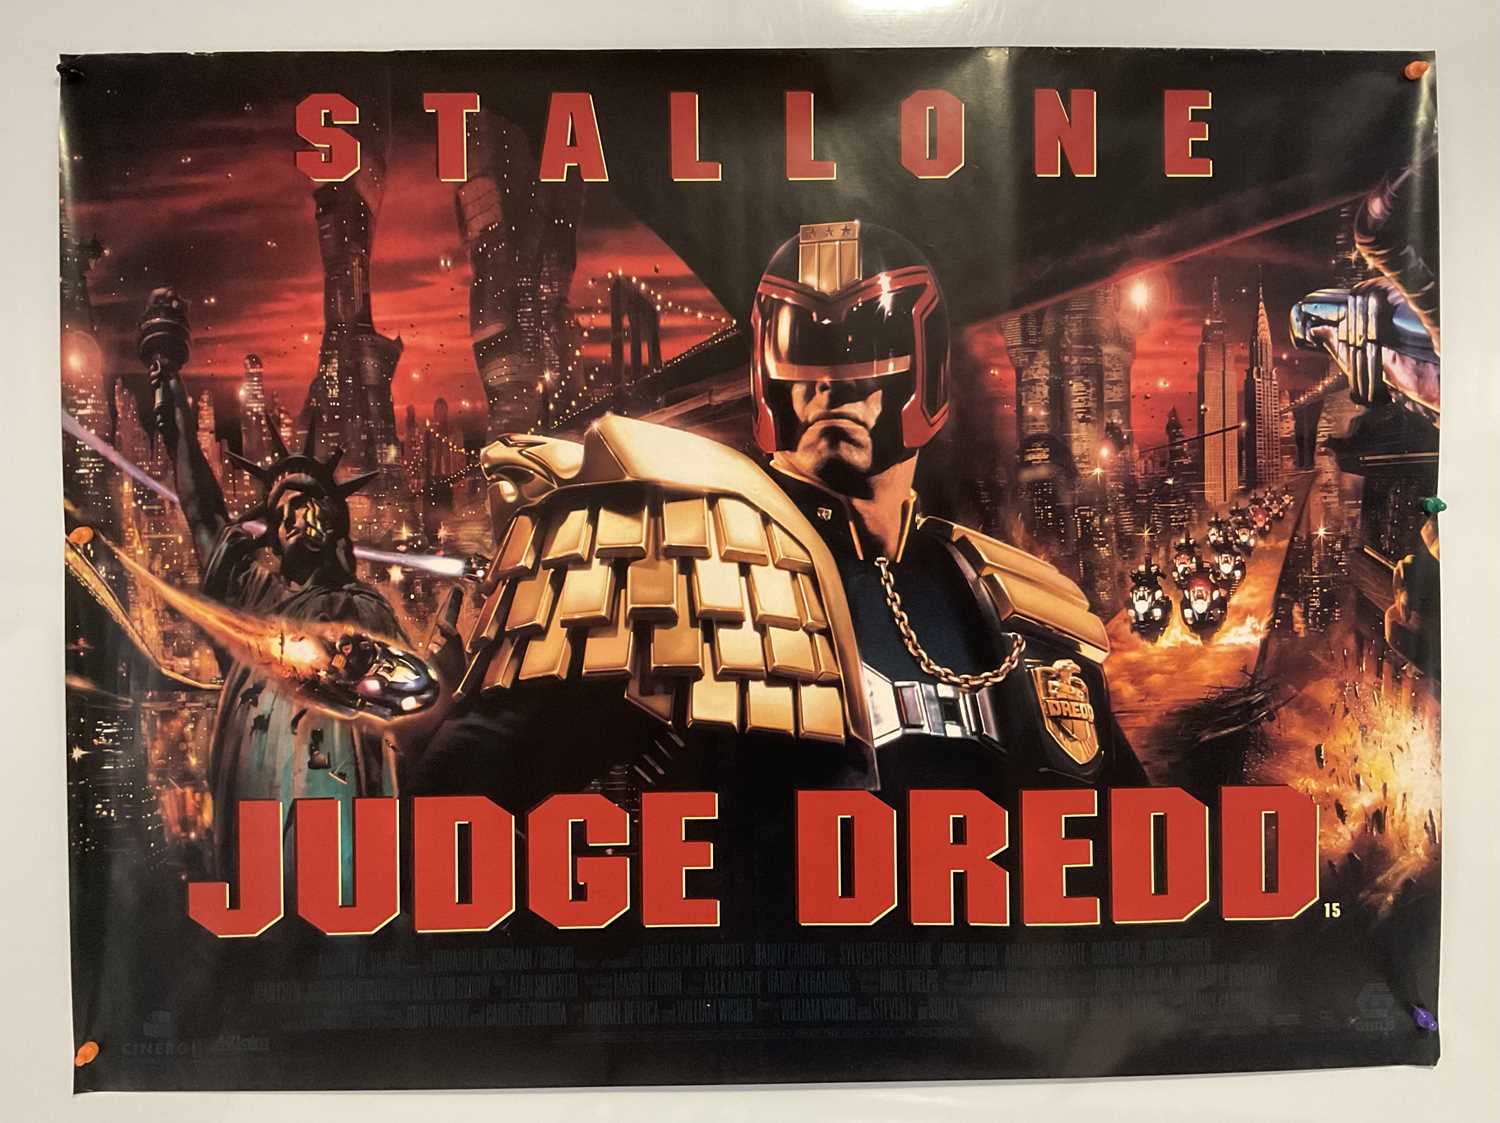 Lot 46 - JUDGE DREDD (1995) UK Quad film poster, comic...